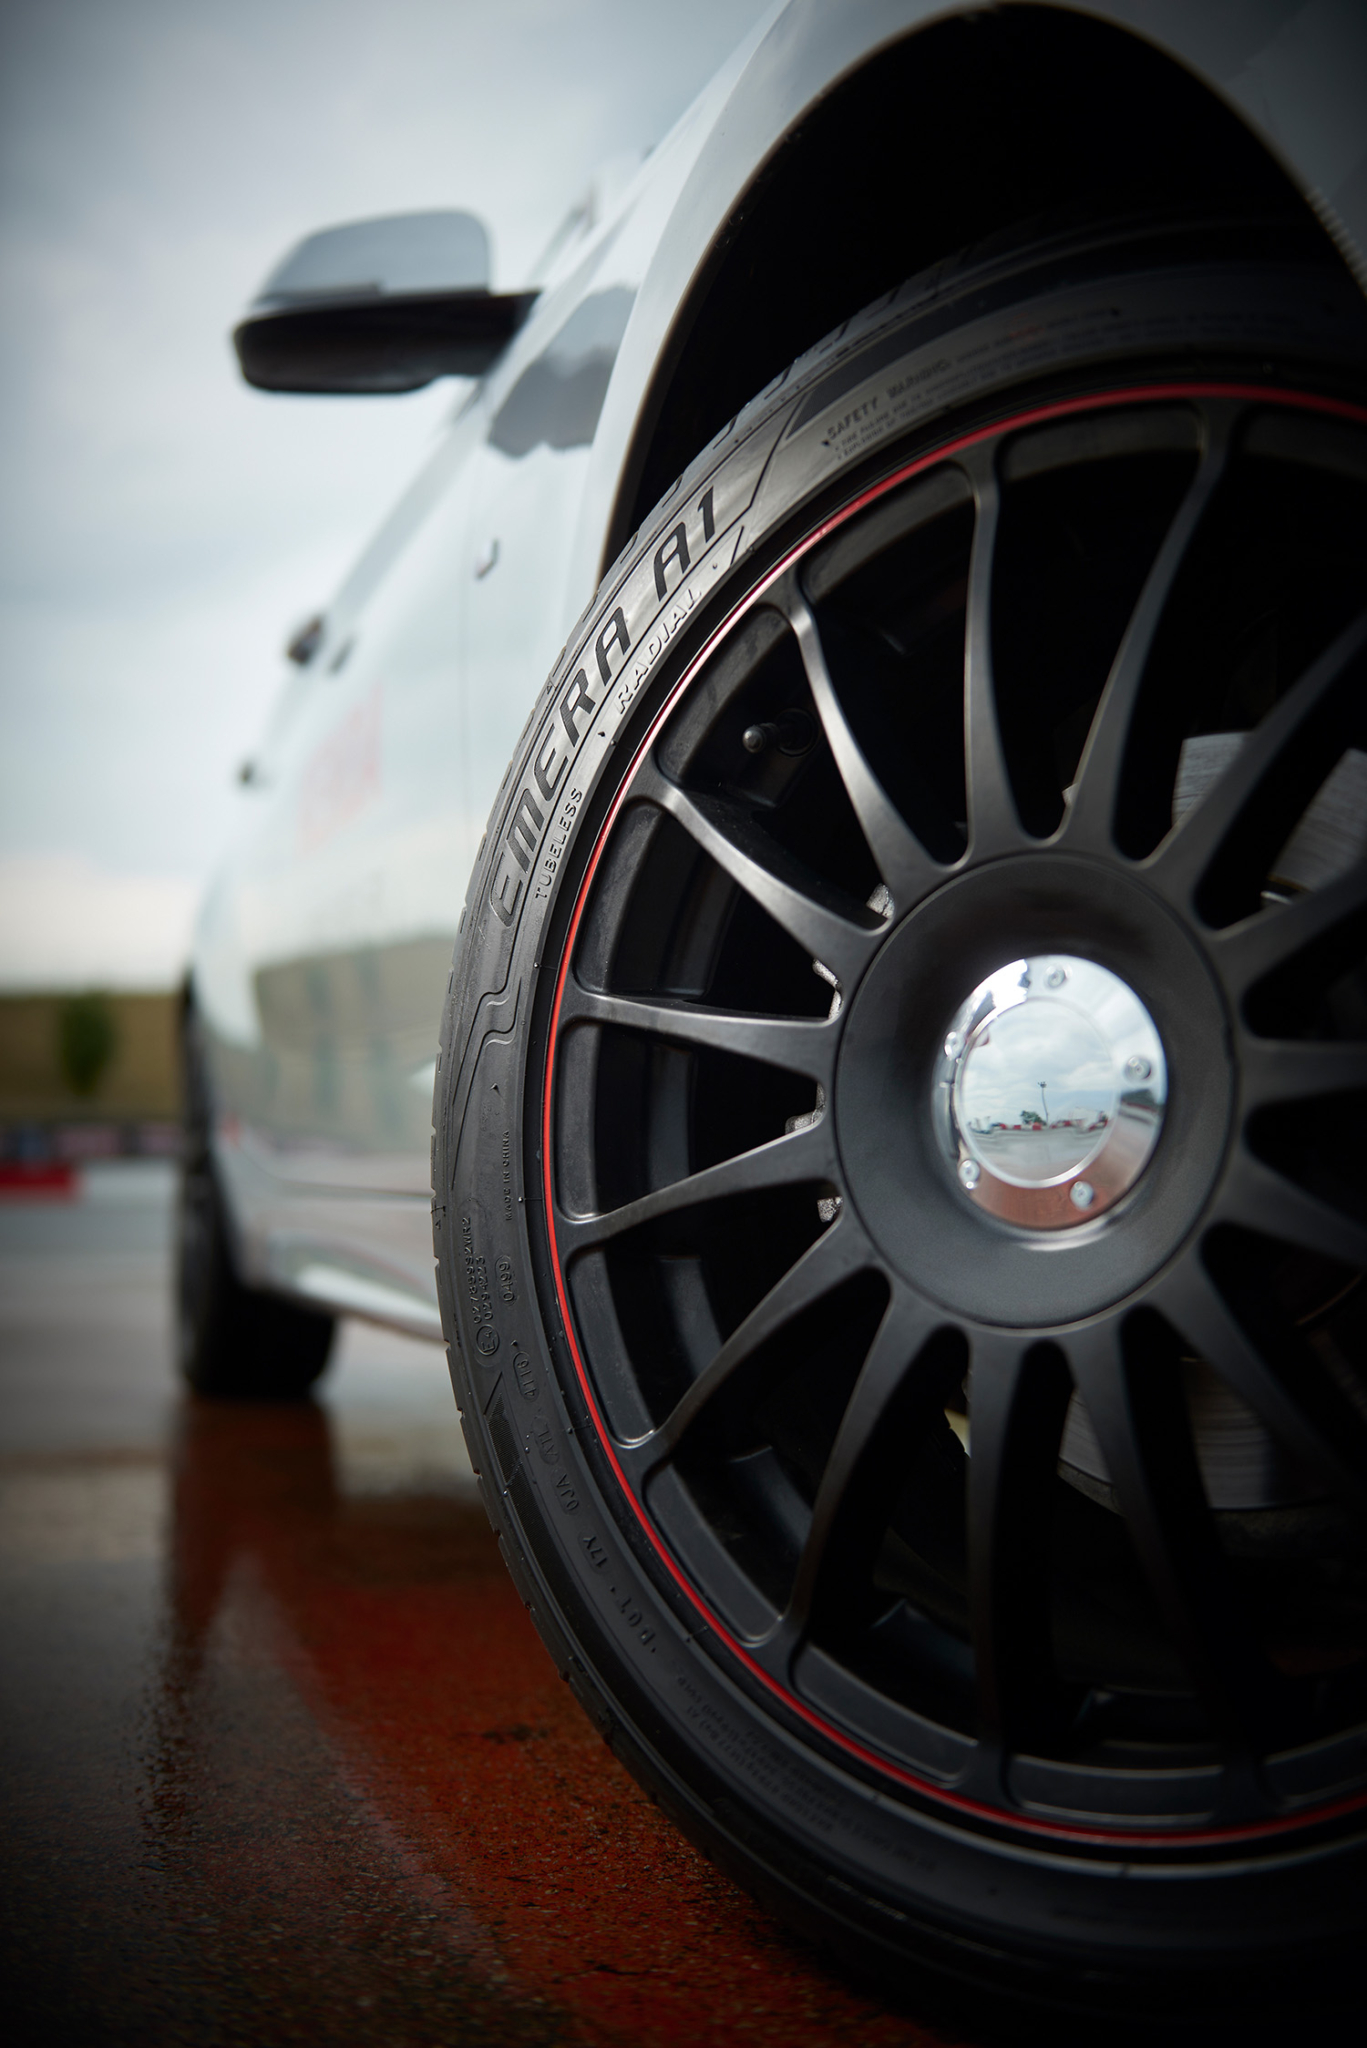 Kenda Europe to debut new all-season tyres